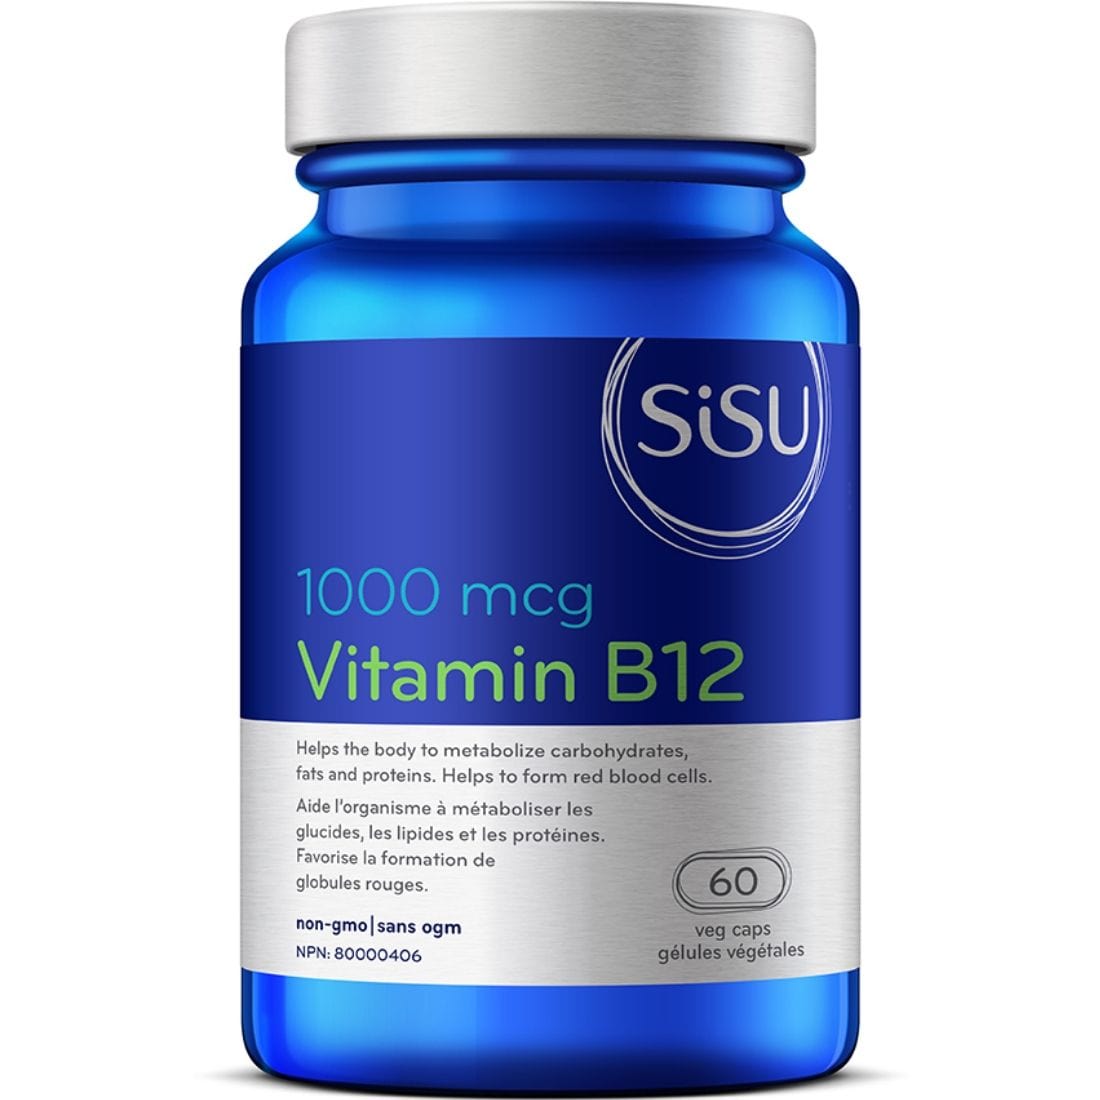 SISU Vitamin B12, Cyanocobalamin, 1000mcg, 60 Vegetable Capsules